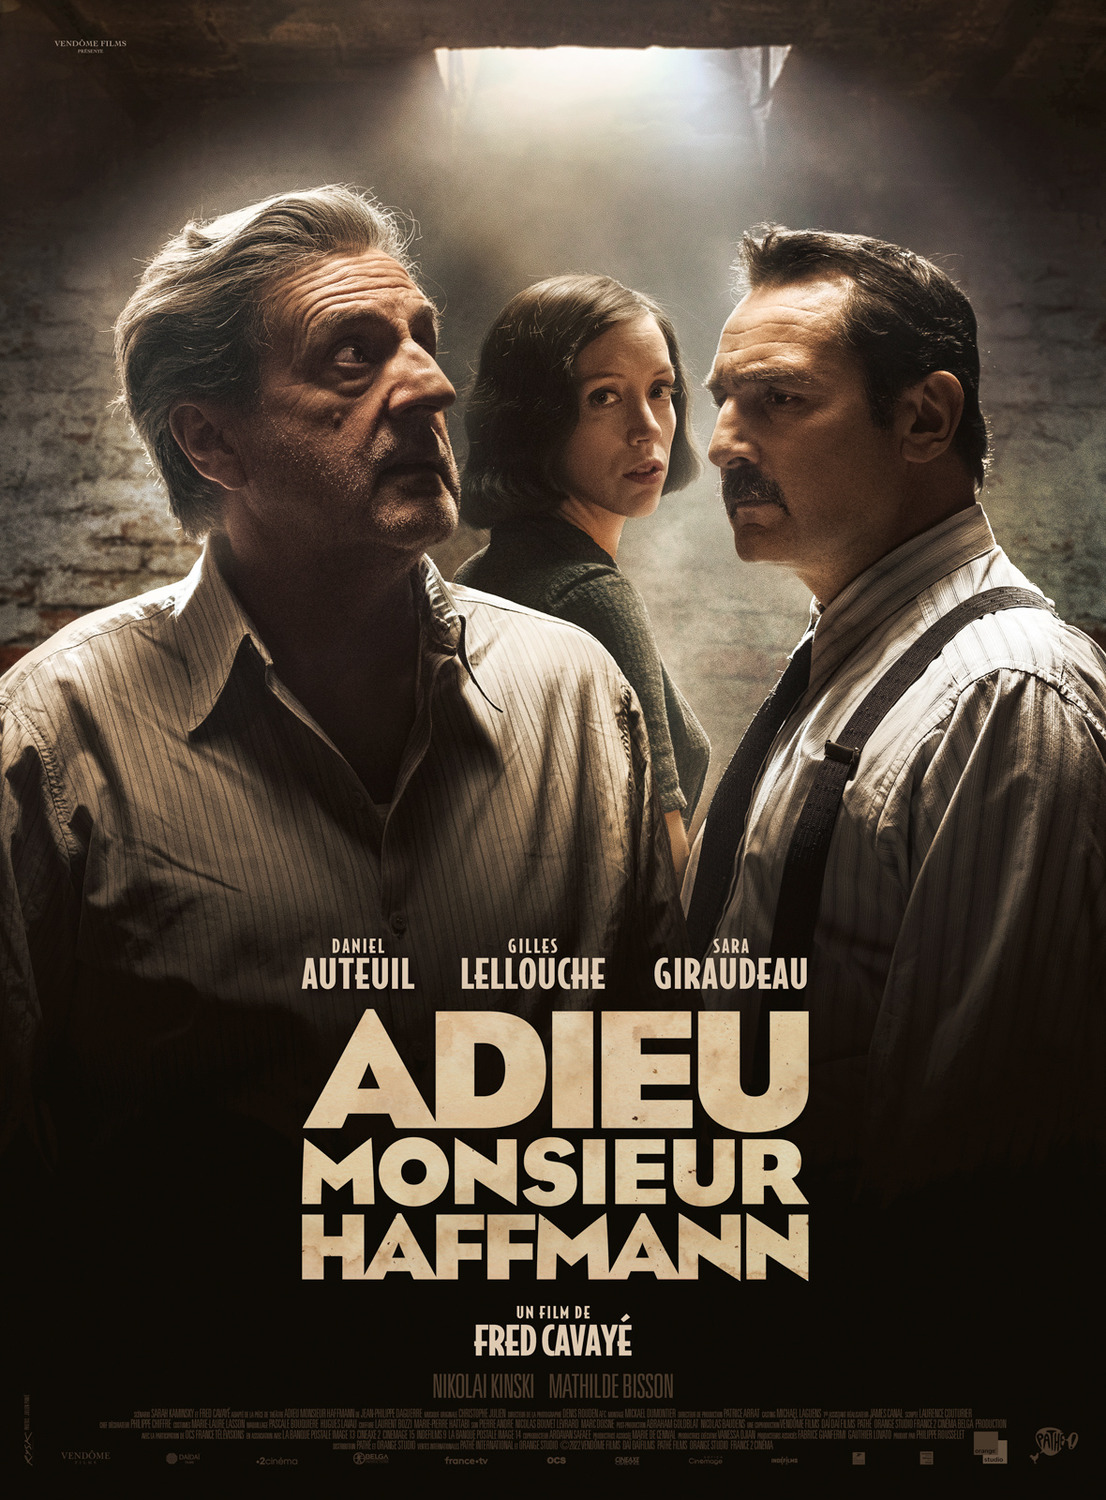 Extra Large Movie Poster Image for Adieu Monsieur Haffmann 